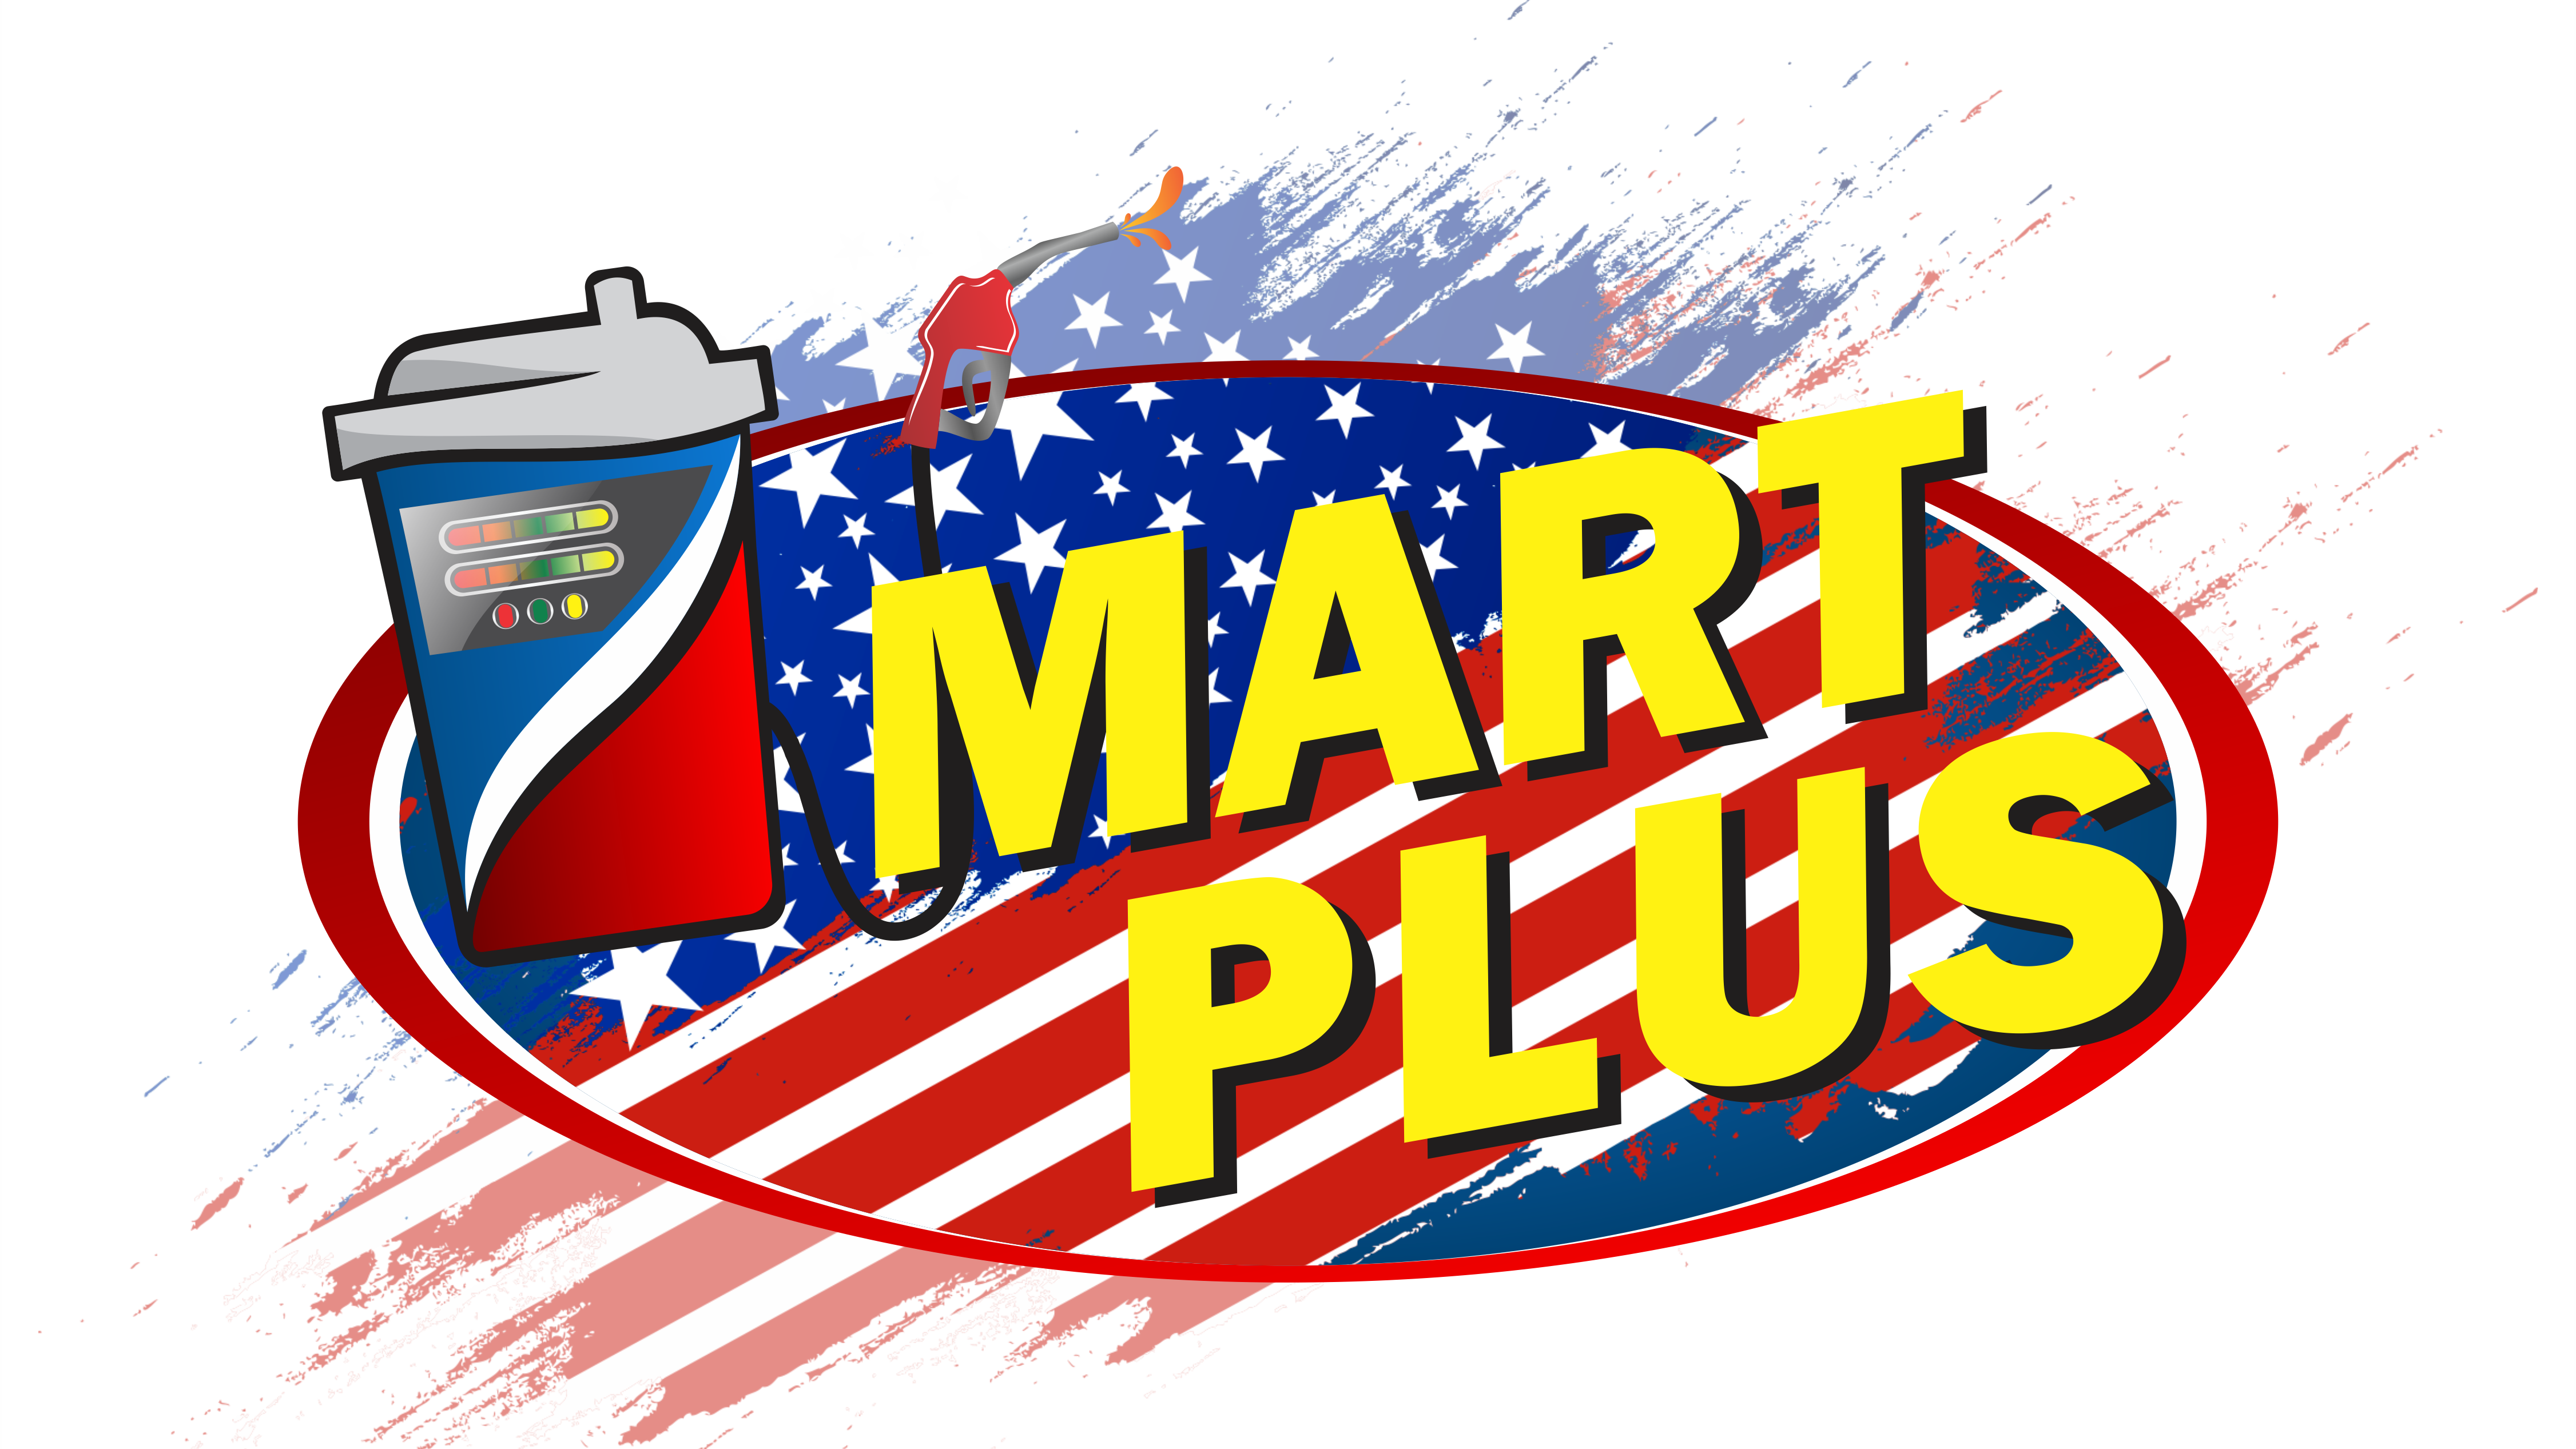 Martplususa logo